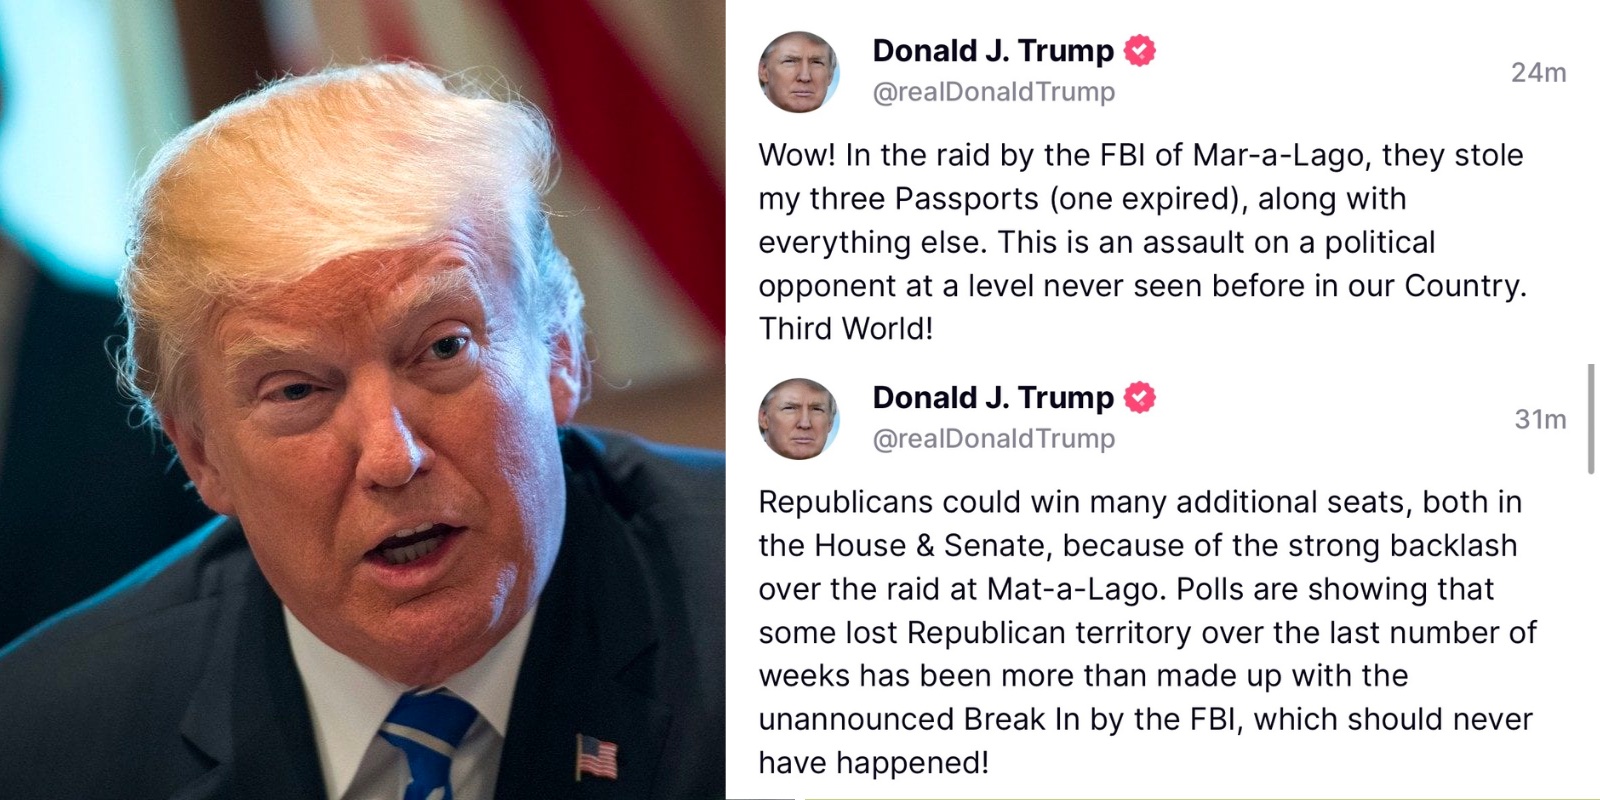 BREAKING: Trump says FBI took his passport in Mar-a-Lago raid